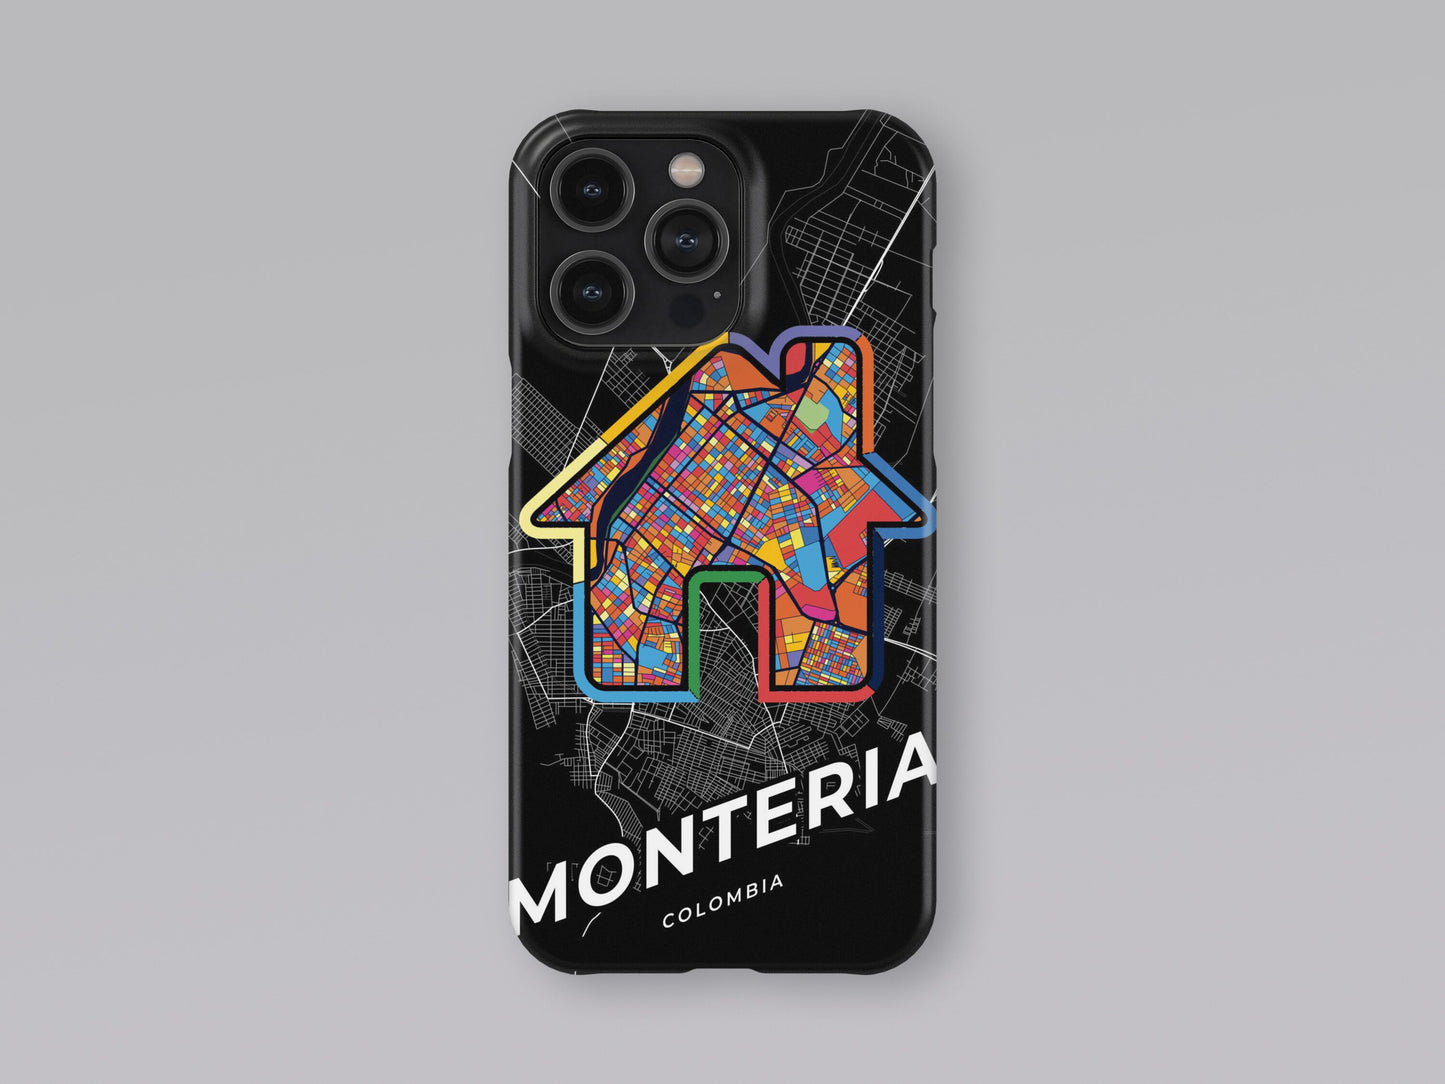 Monteria Colombia slim phone case with colorful icon 3